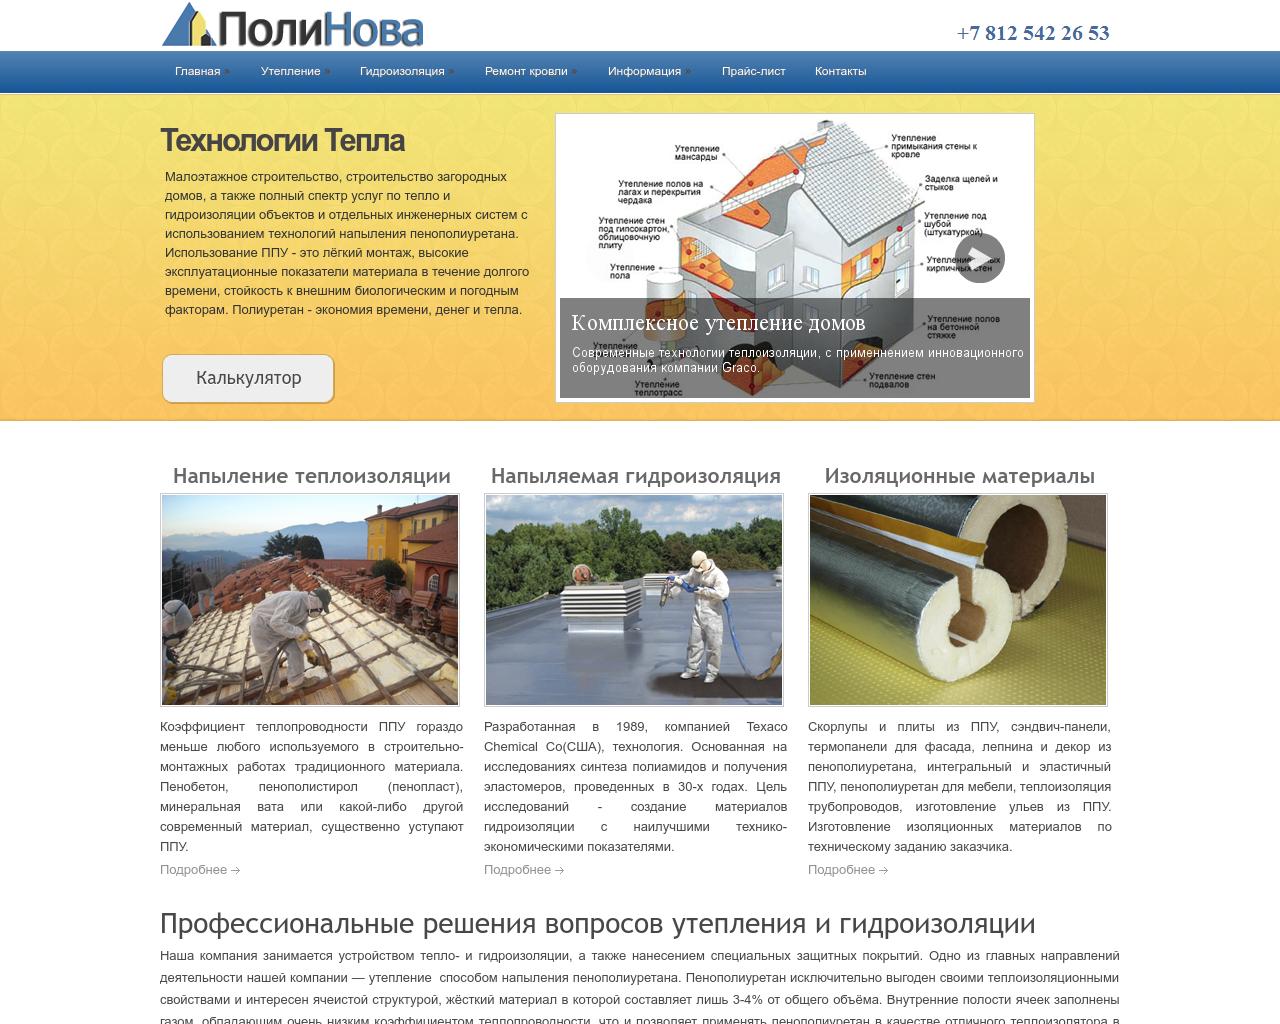 Изображение сайта polynova.ru в разрешении 1280x1024